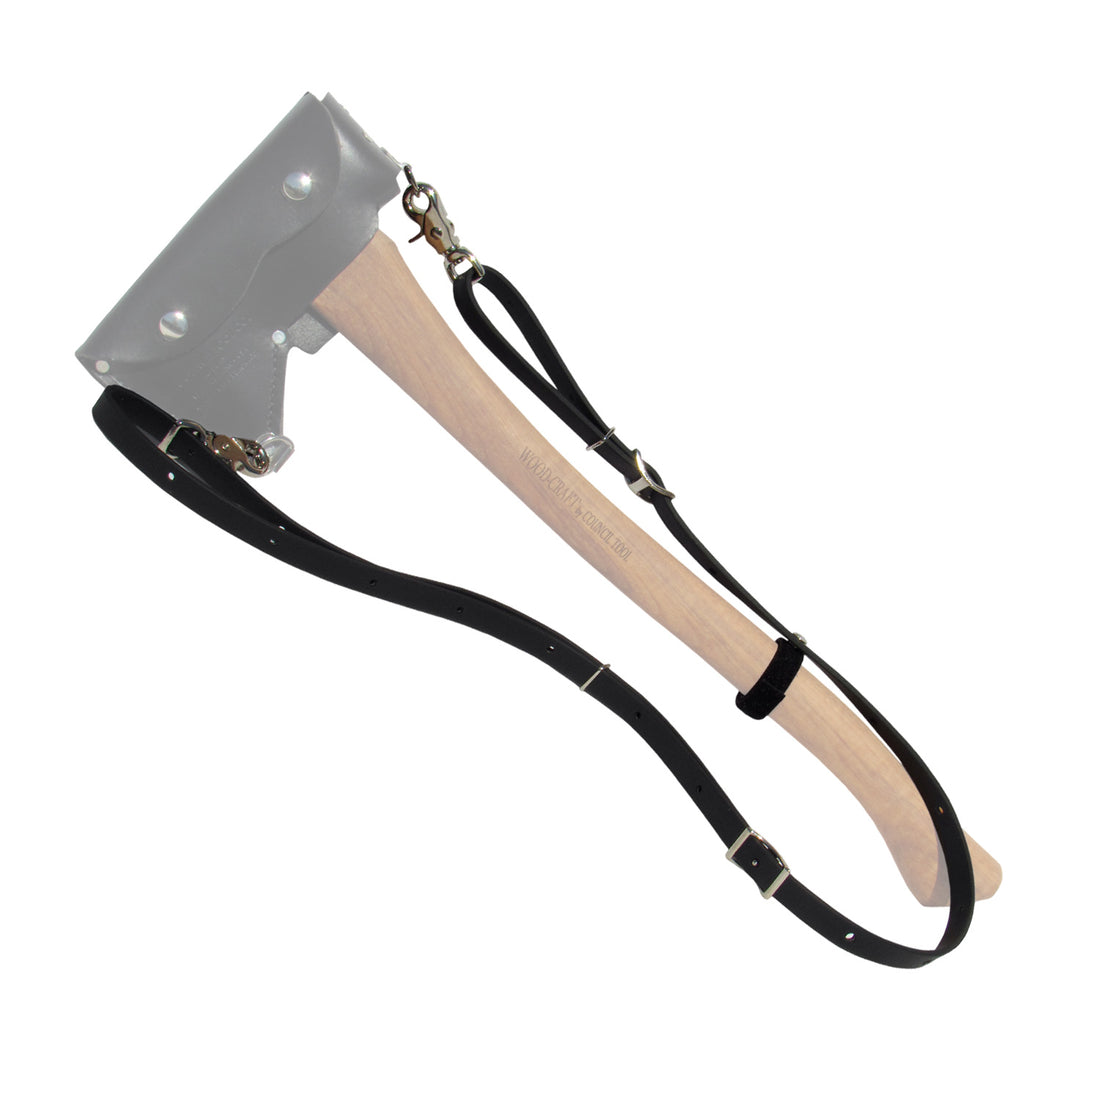 Adjustable Shoulder Sling W/Hooks &amp; Strap For Axe Carry view of sling